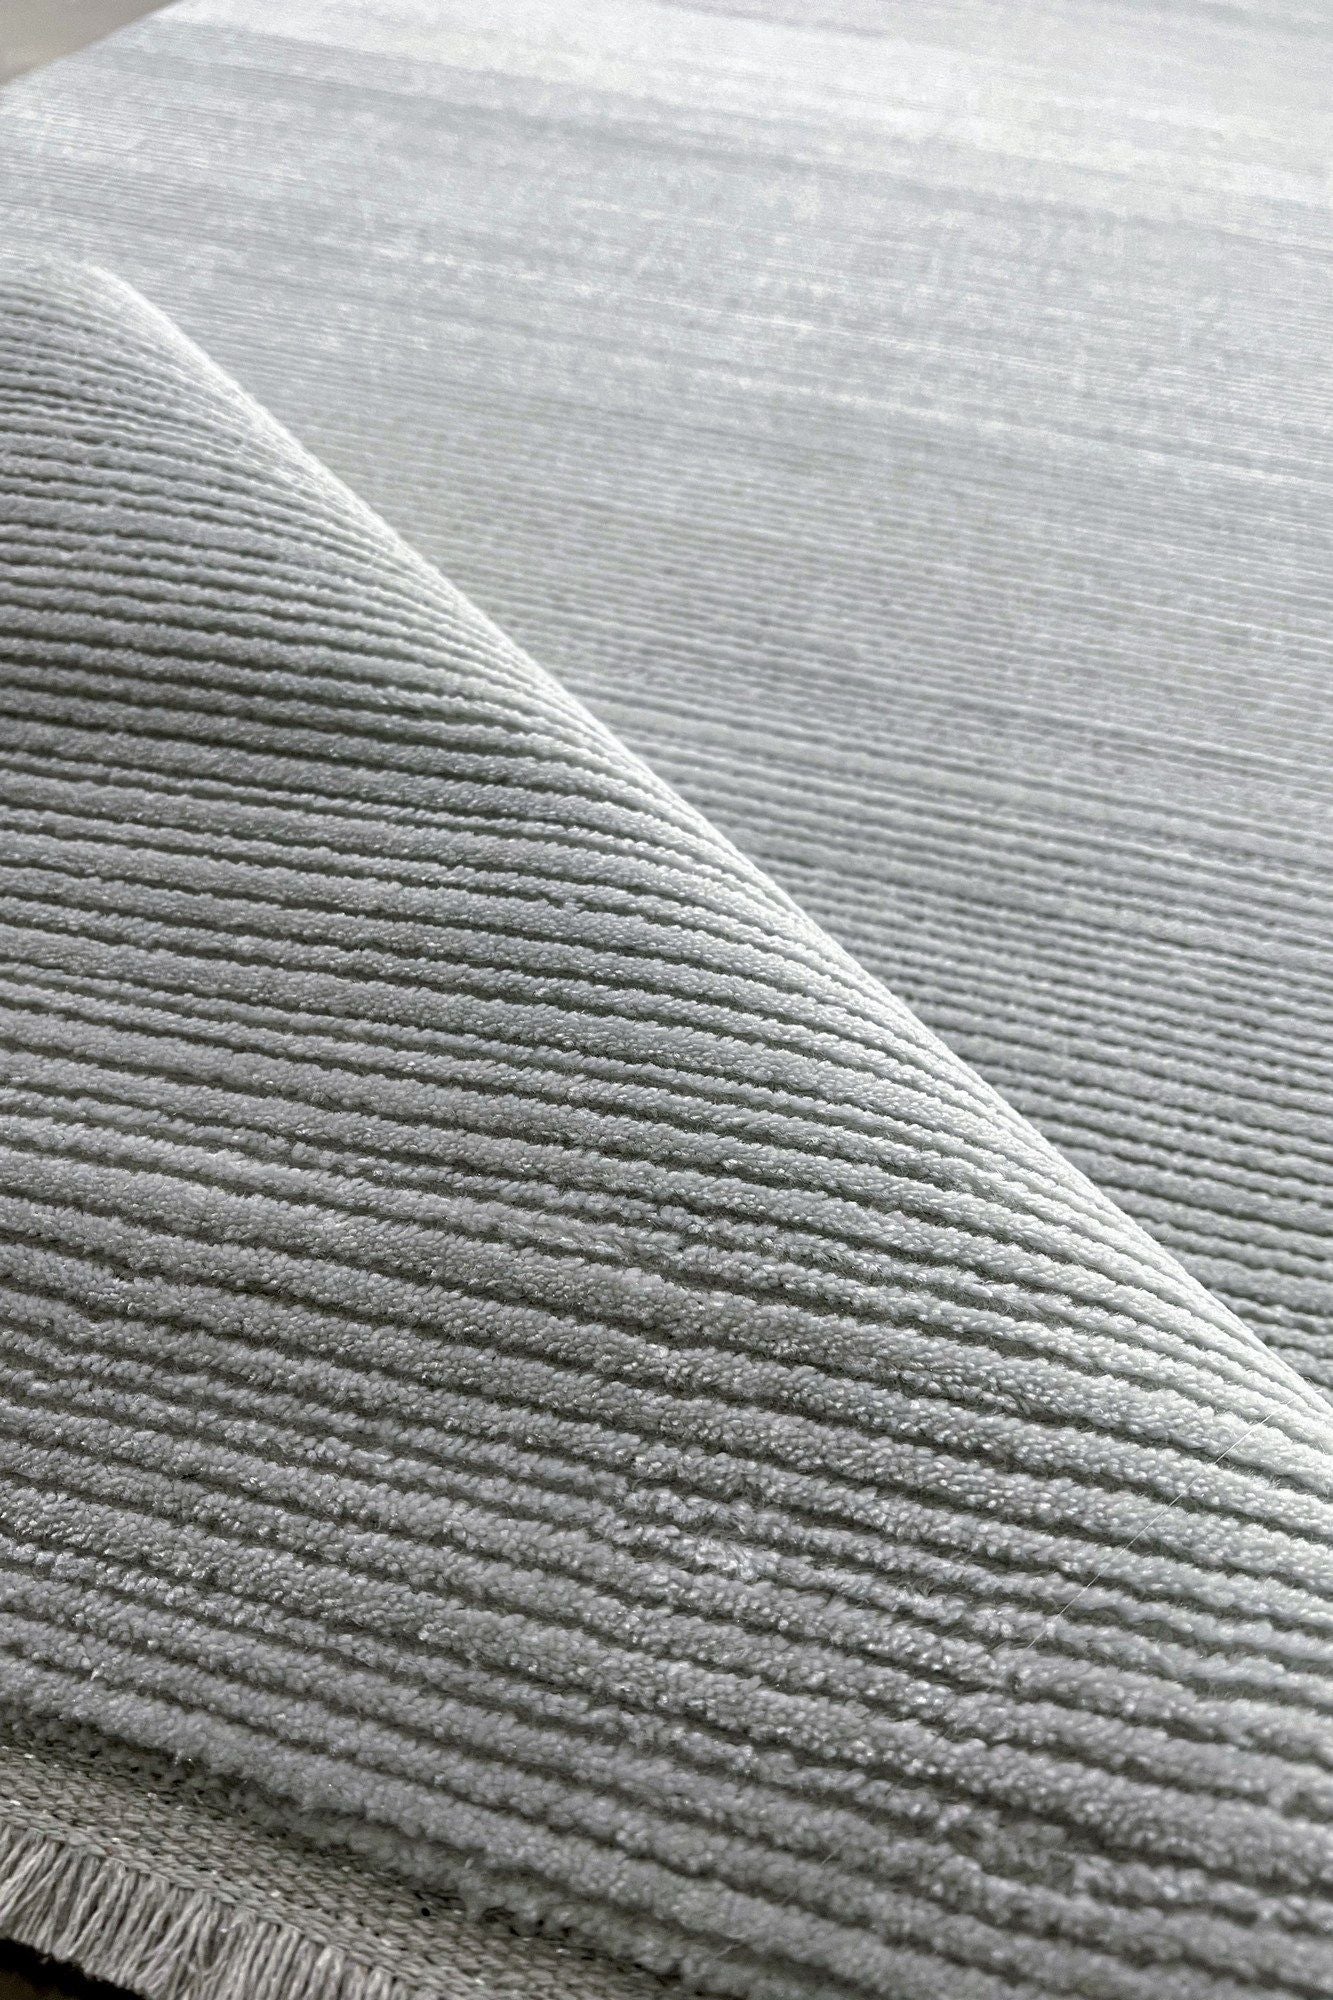 Nora 7338 - Carpet (200 x 290)